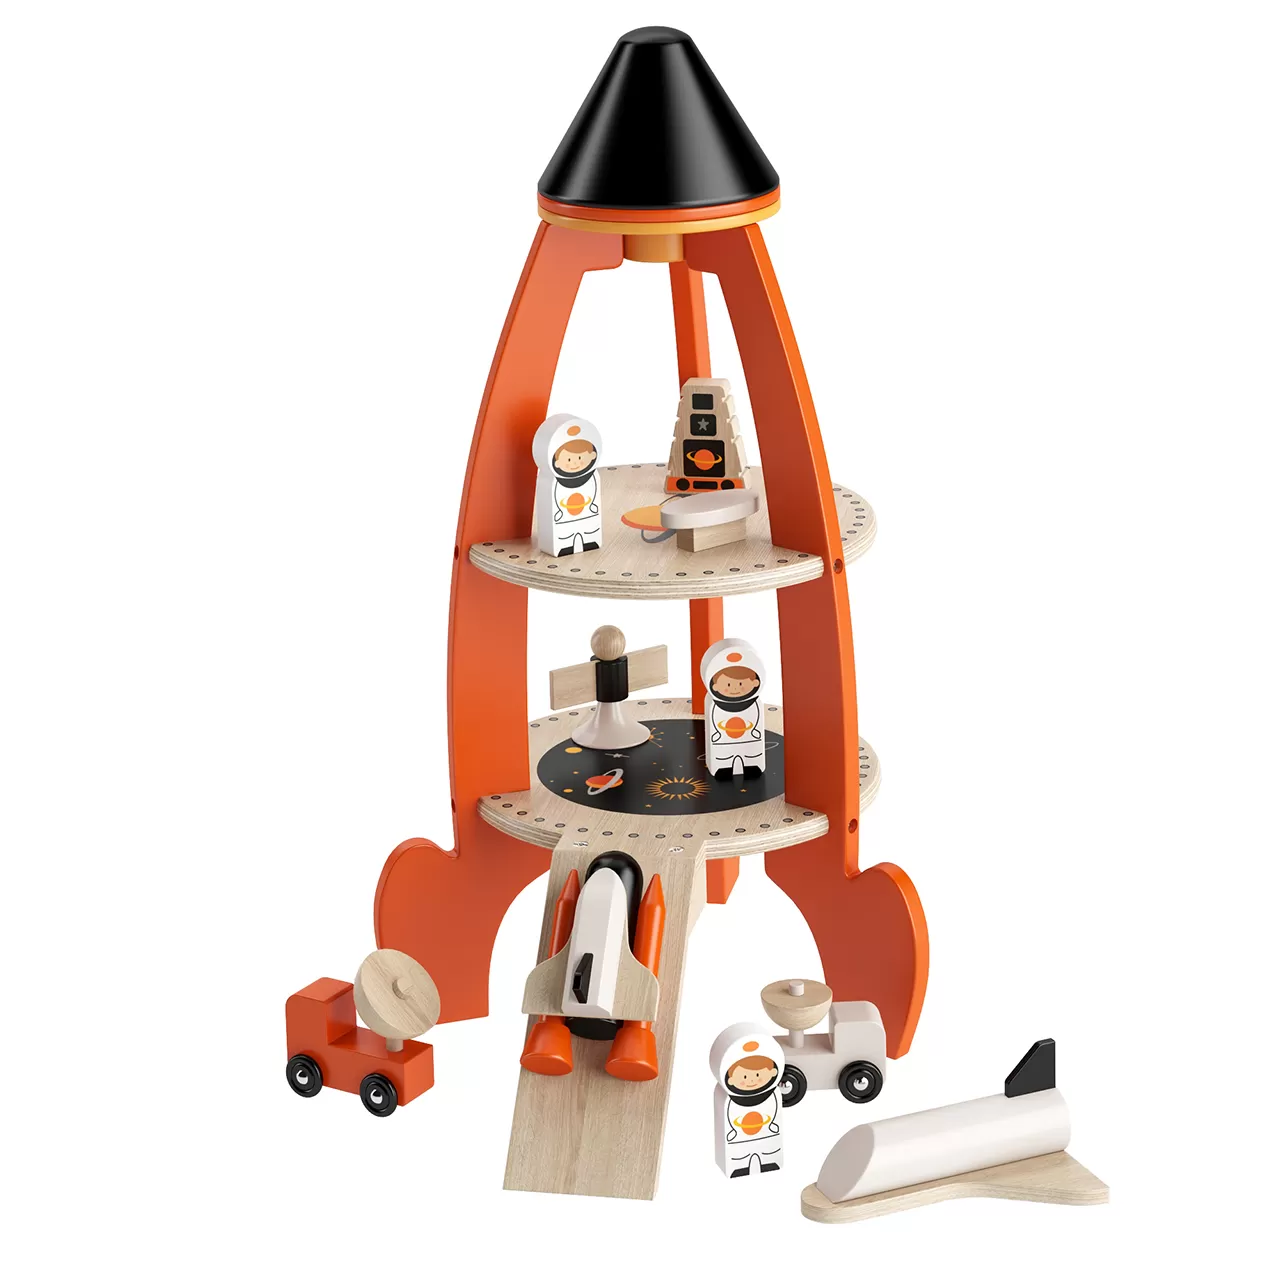 Kids – cosmic-rocket-set-toy-by-tender-leaf-toys